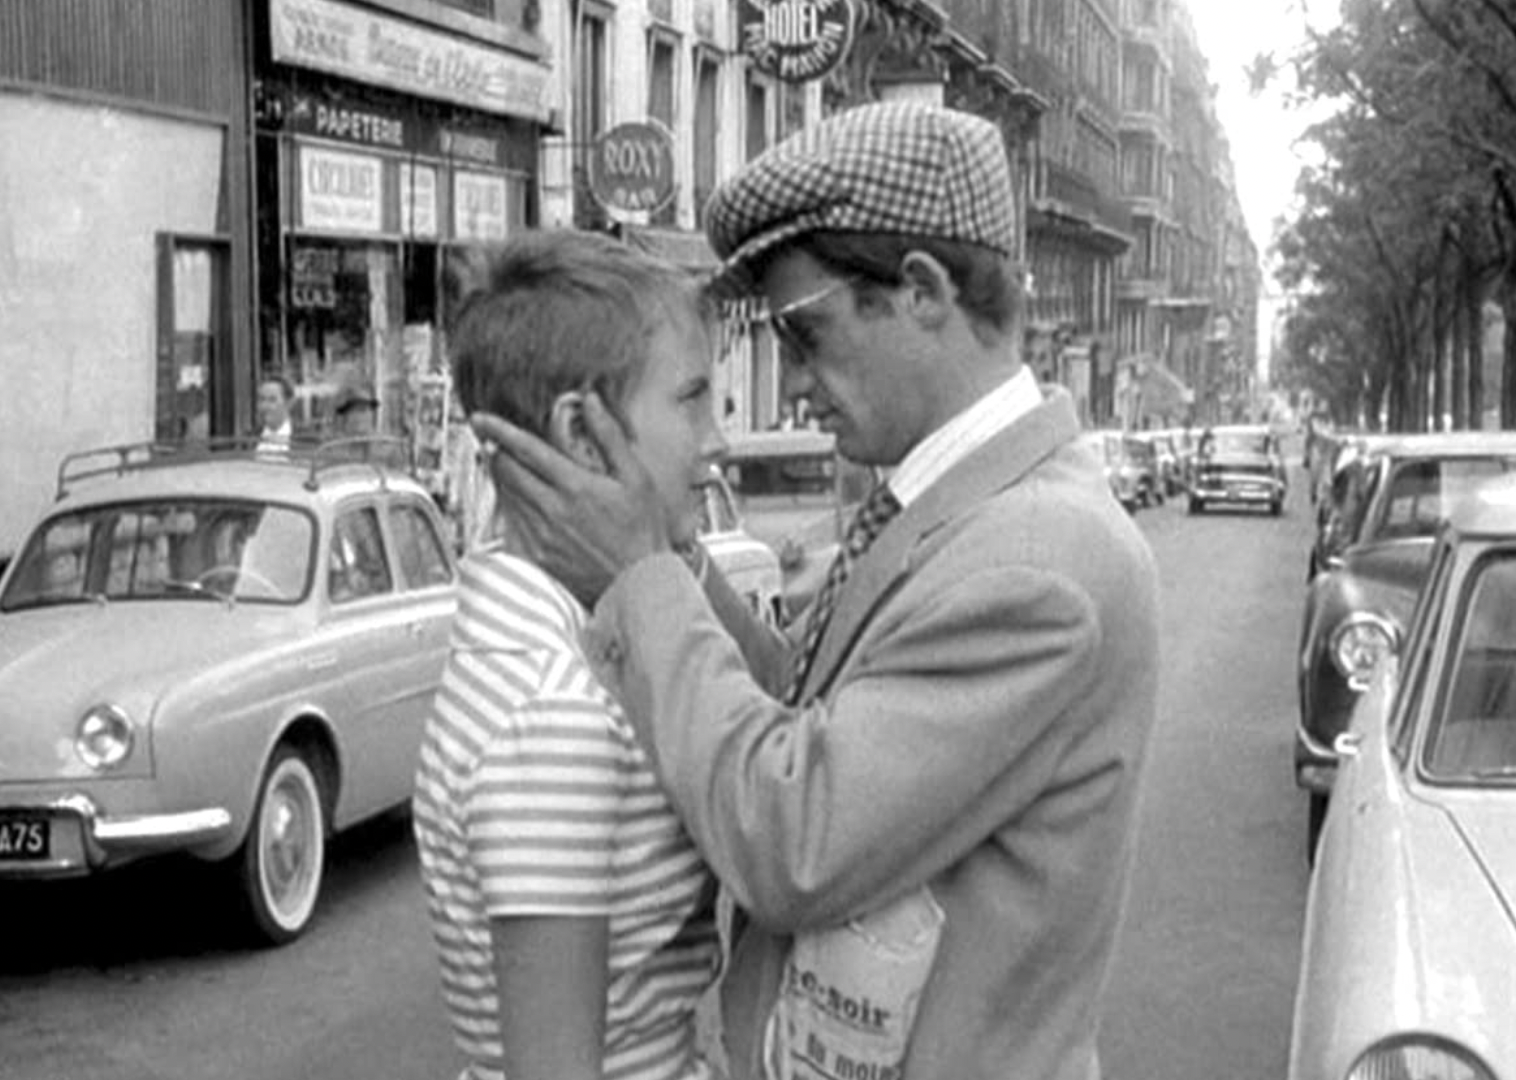 Jean-Paul Belmondo and Jean Seberg in "Breathless"